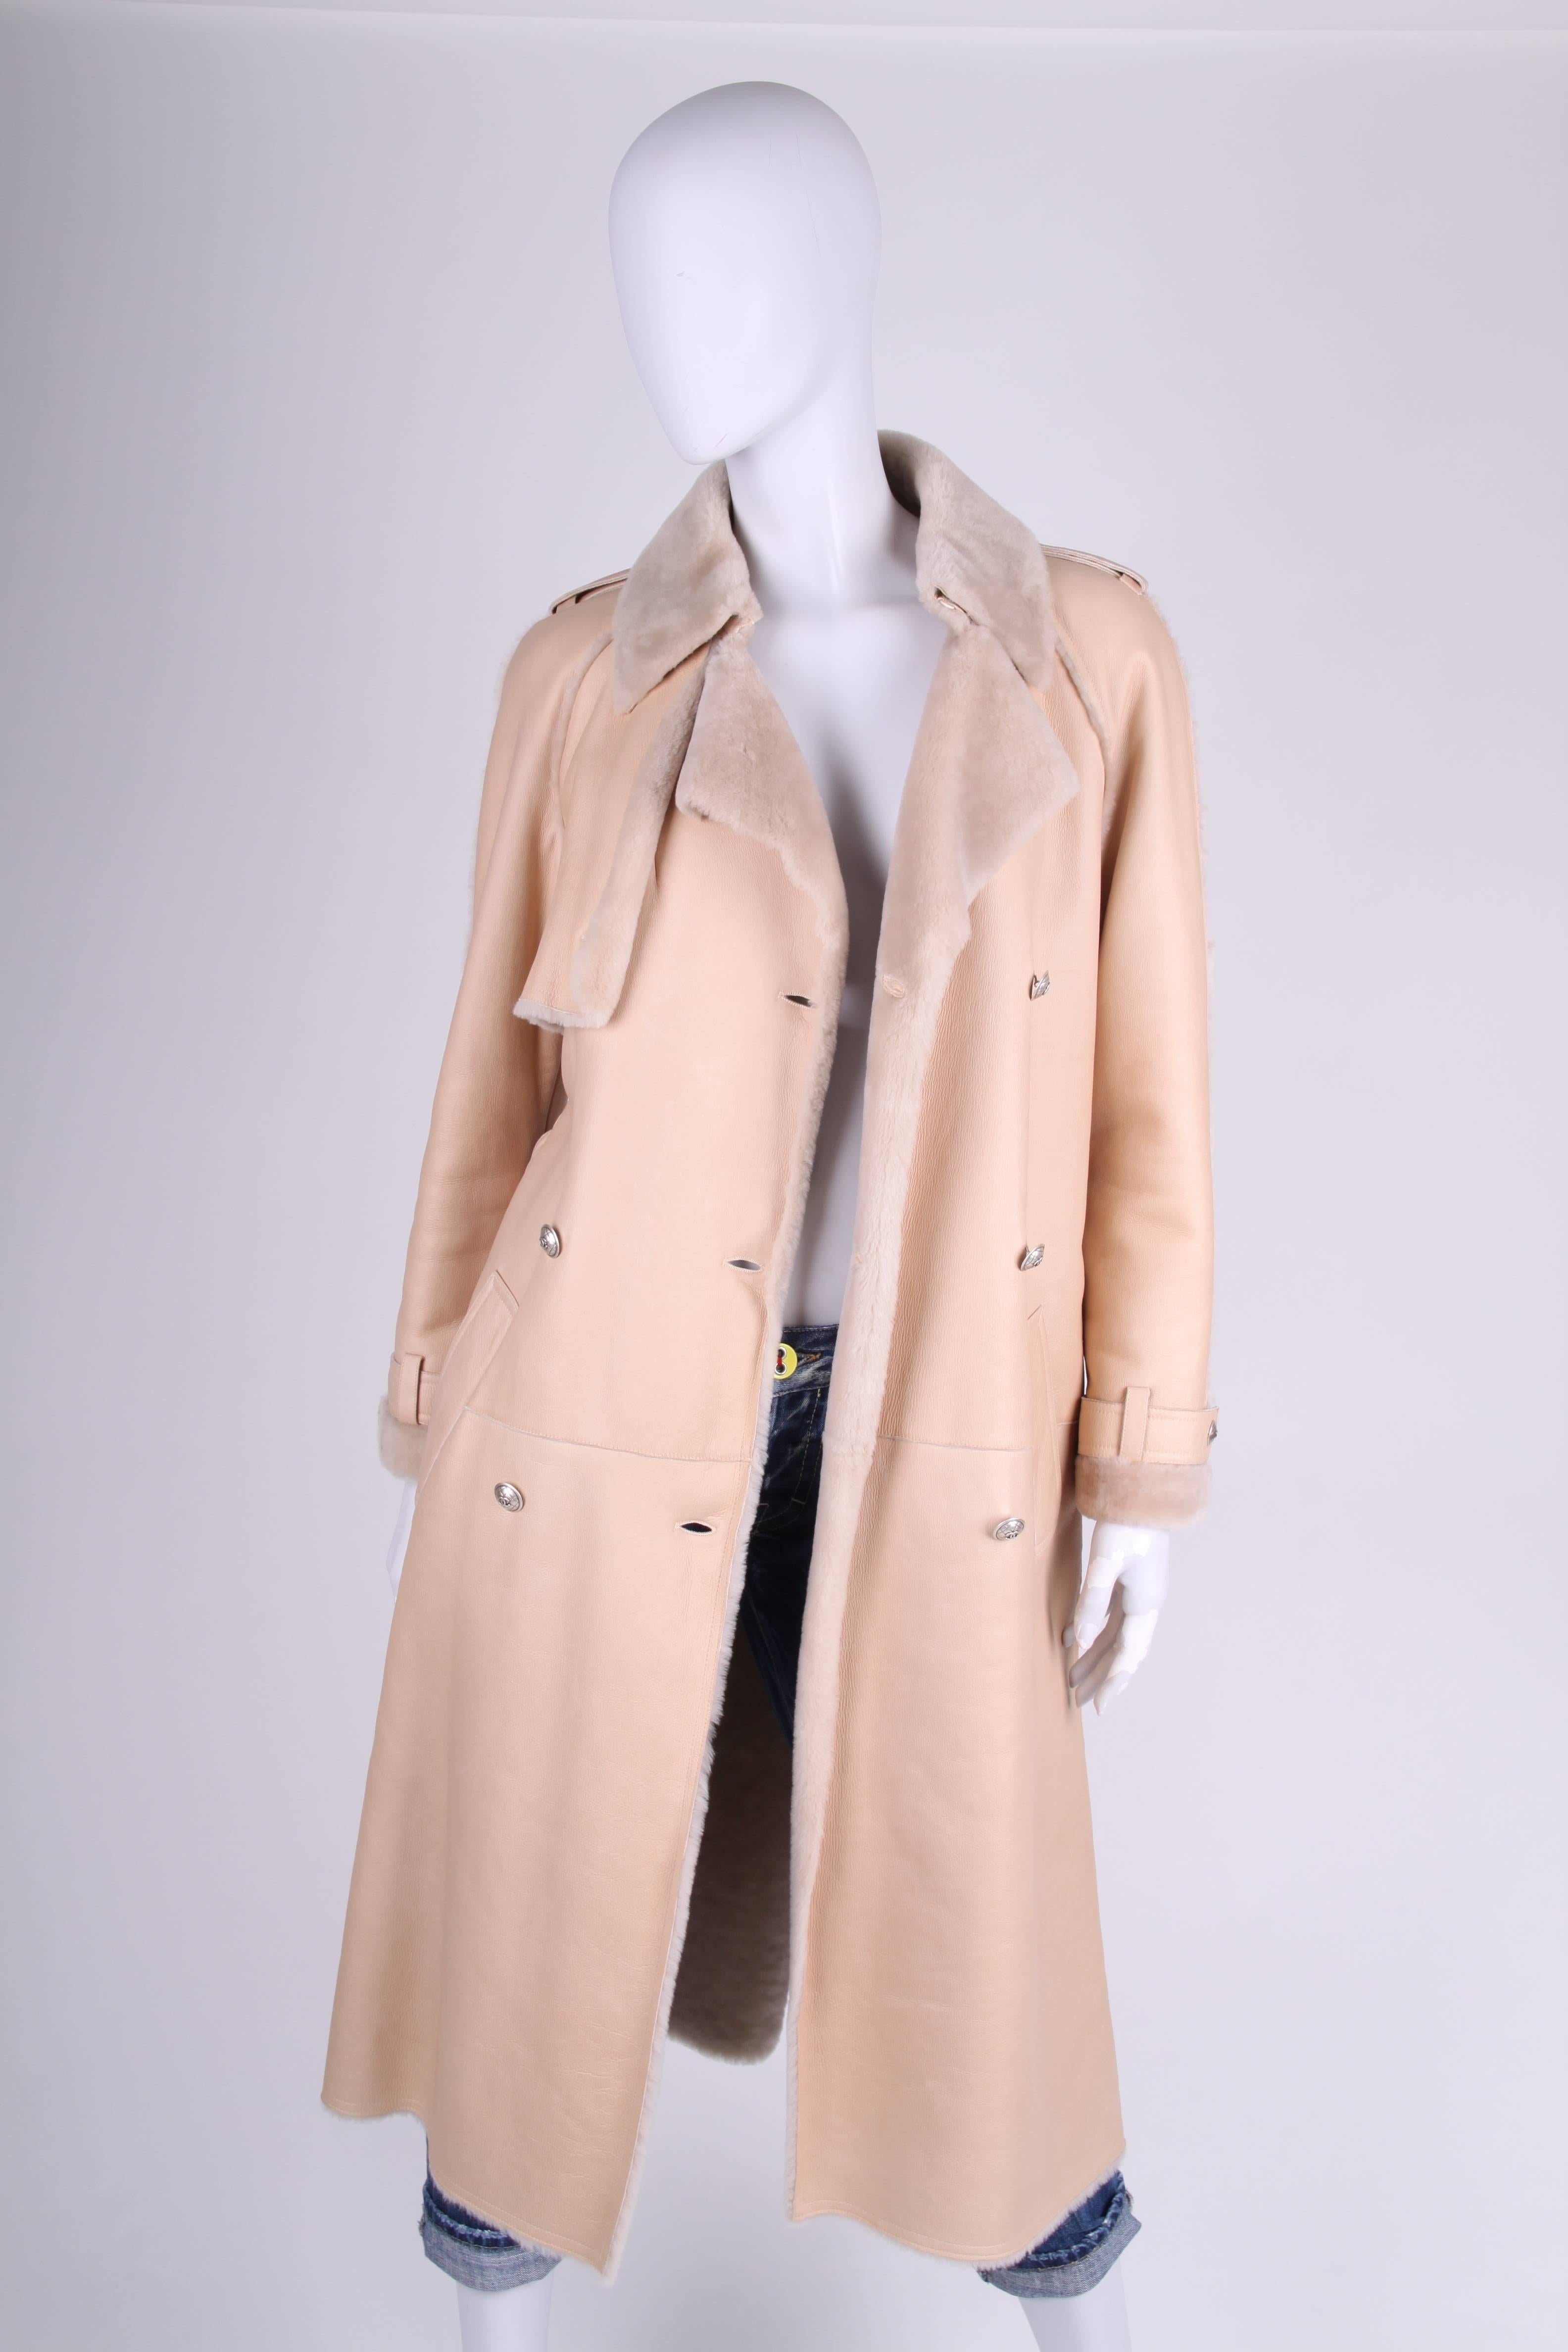 Chanel Trenchcoat - beige lambskin leather 2